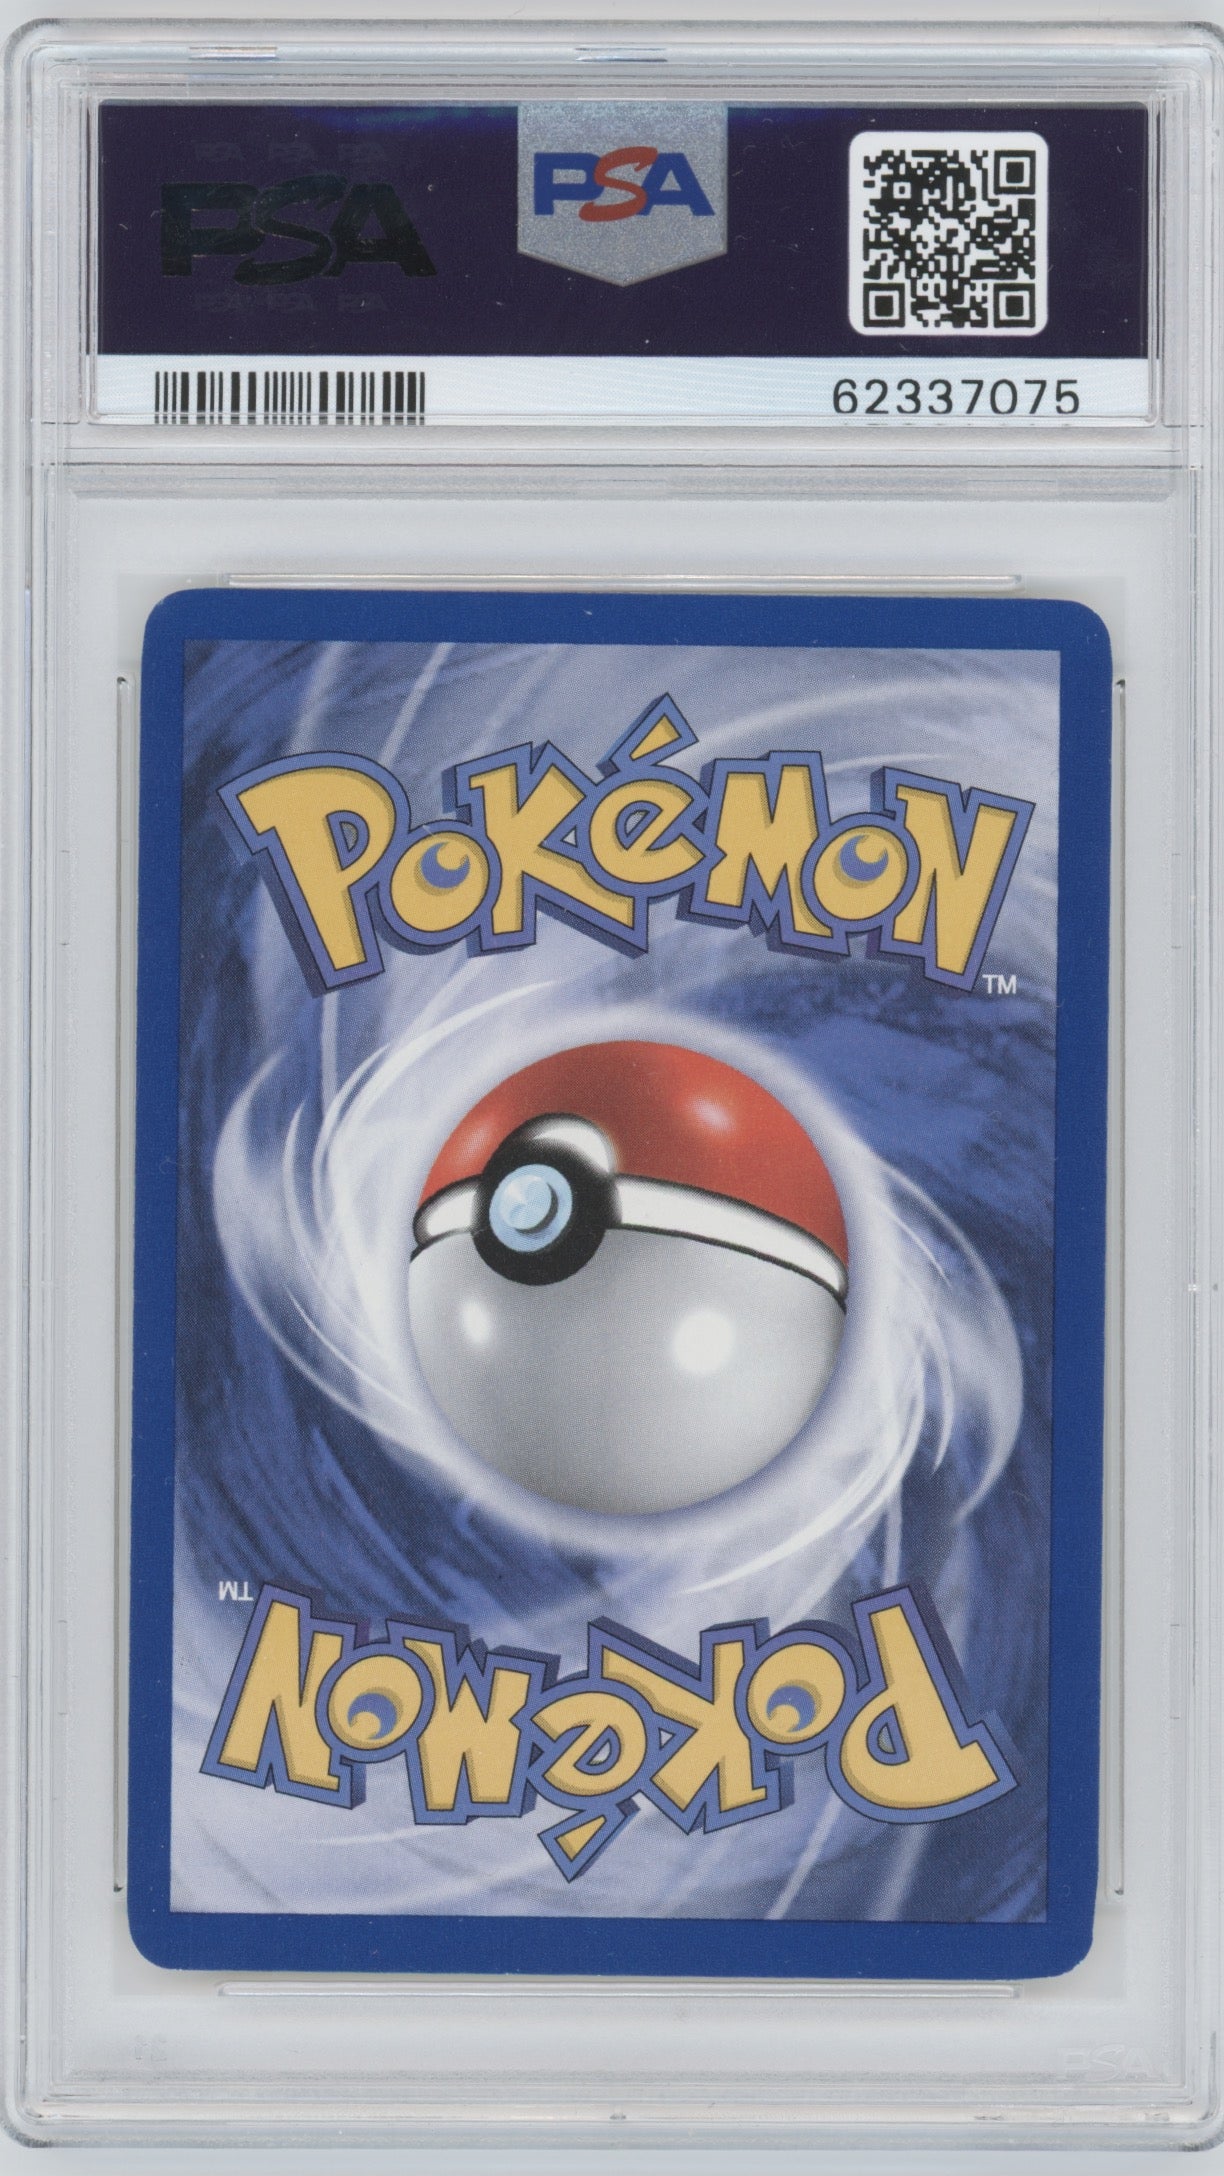 2000 Pokemon Rocket #55 Eevee 1st Edition PSA 9 | Eastridge Sports Cards & Games